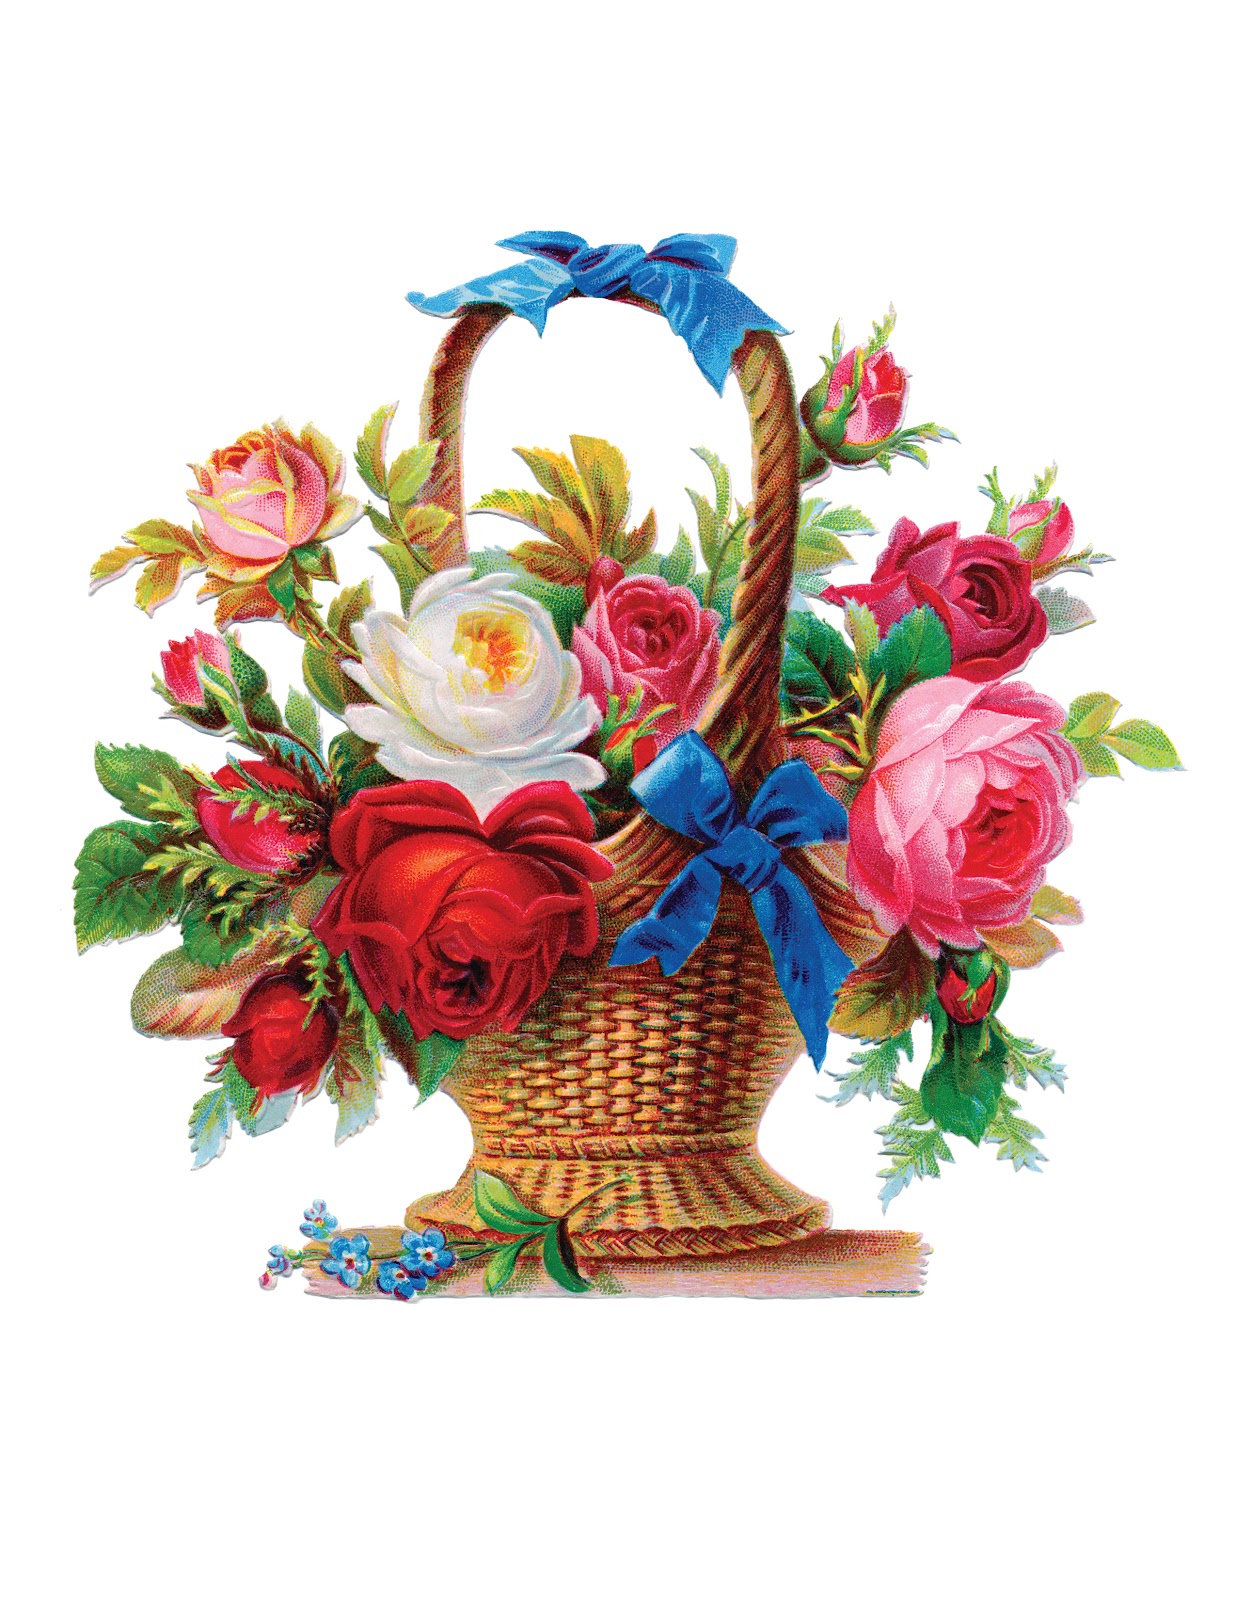 Basket Of Flowers Clip Art   Clipart Best